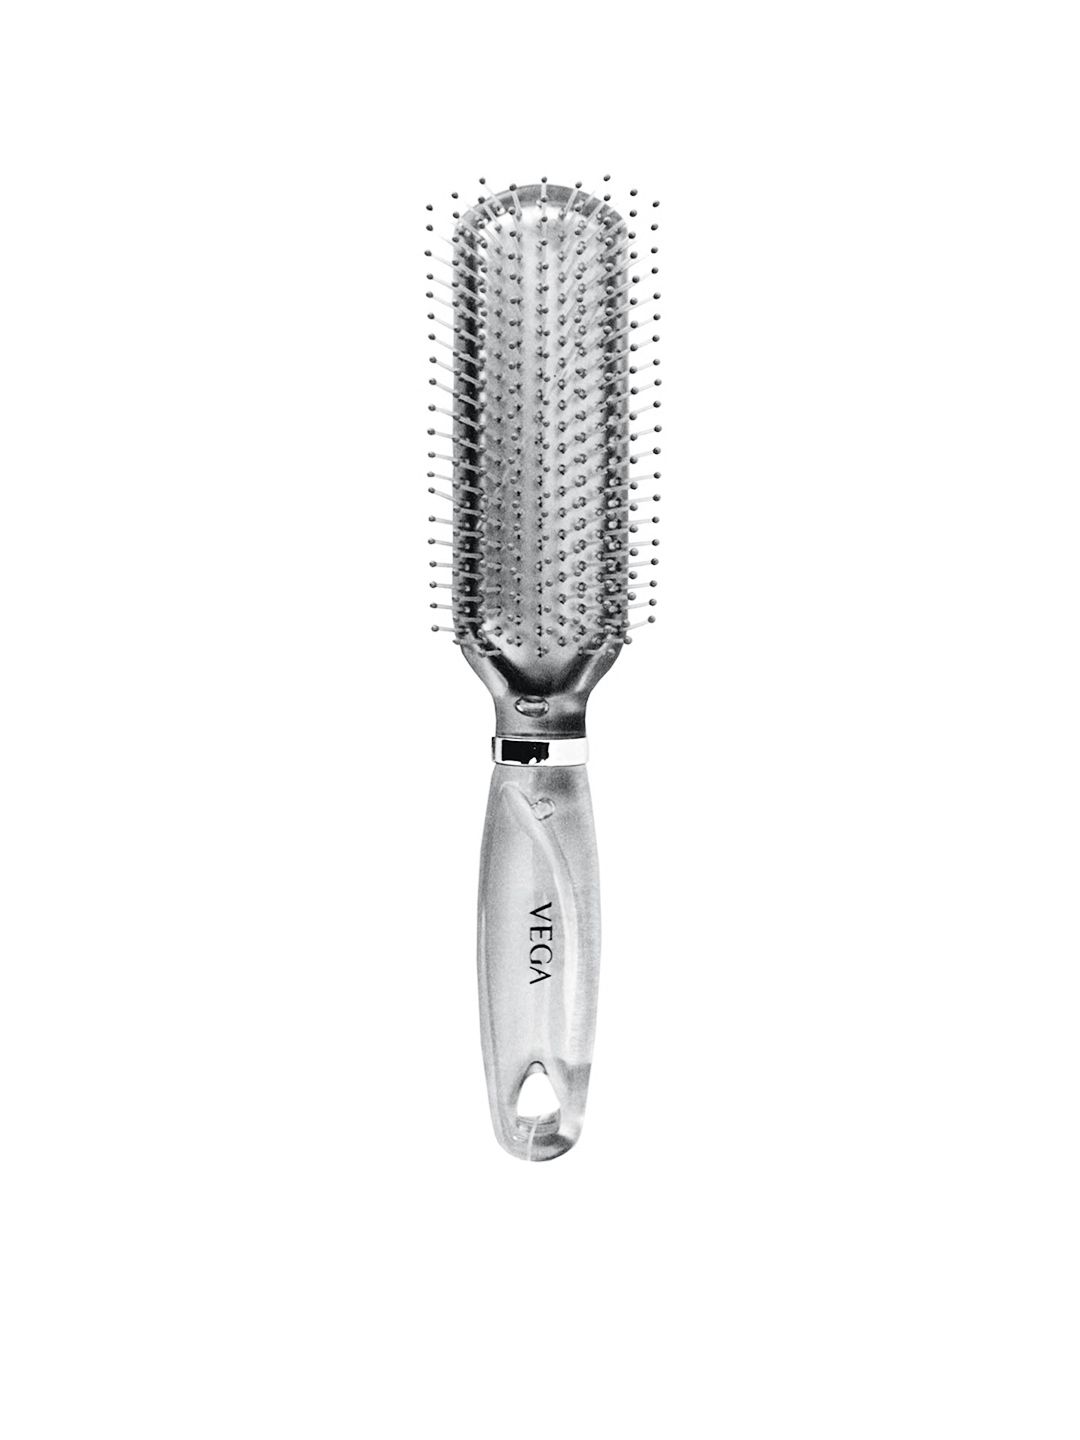 VEGA Unisex Silver-Toned Flat Paddle Hair Brush Price in India